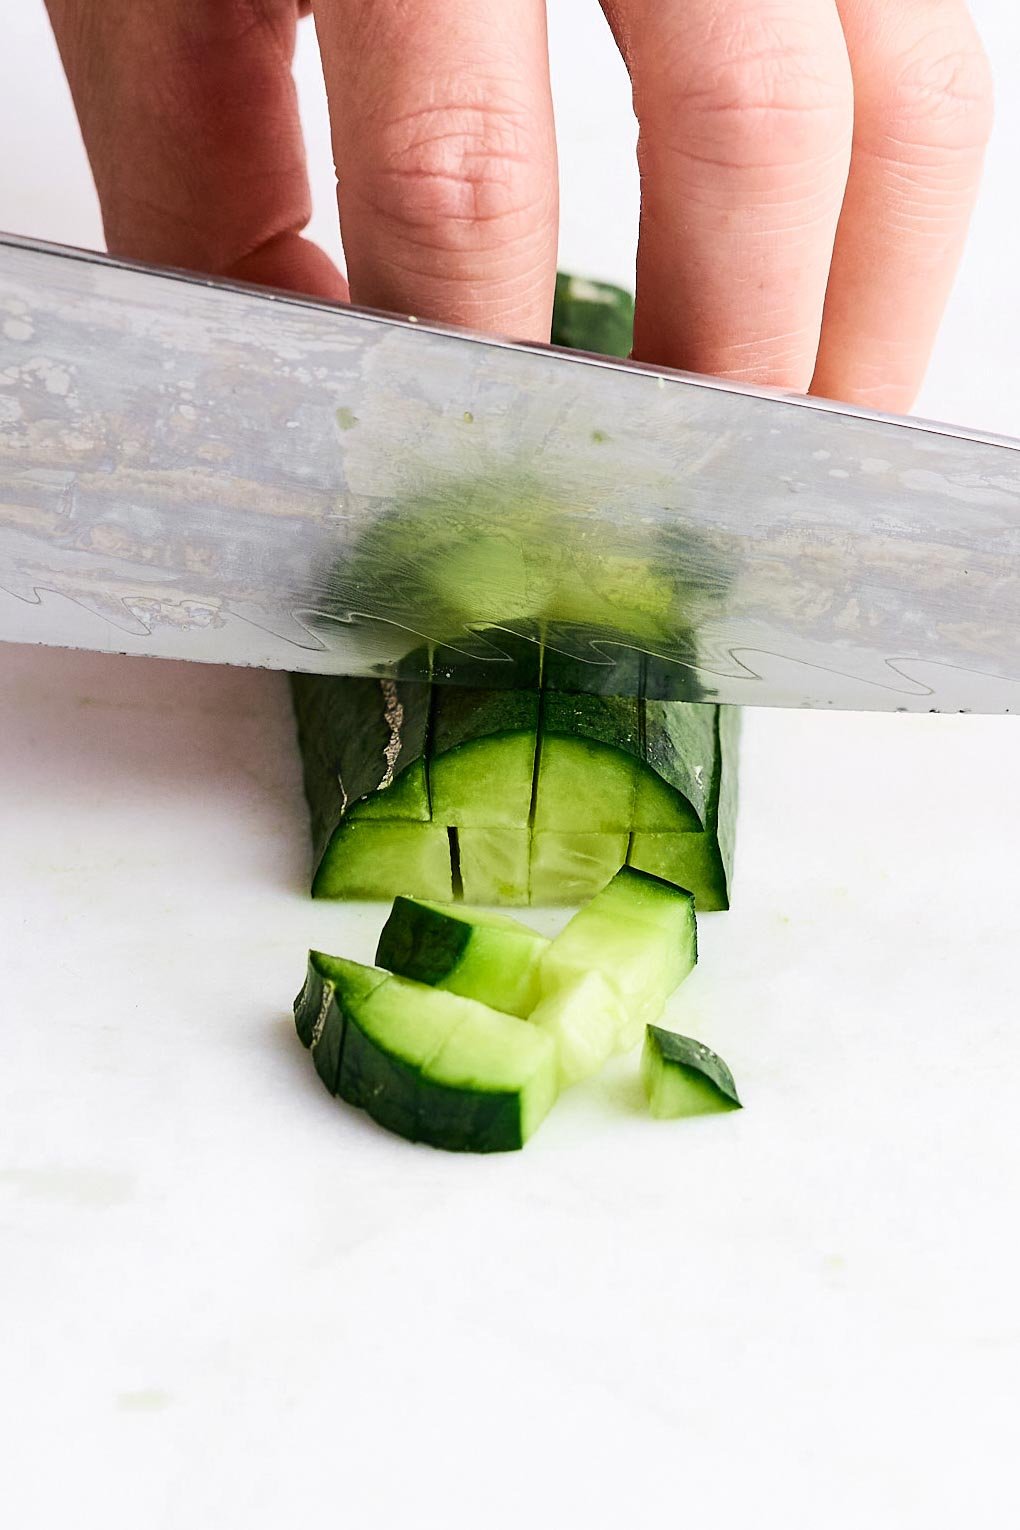 Cutting a cucumber into cubes.